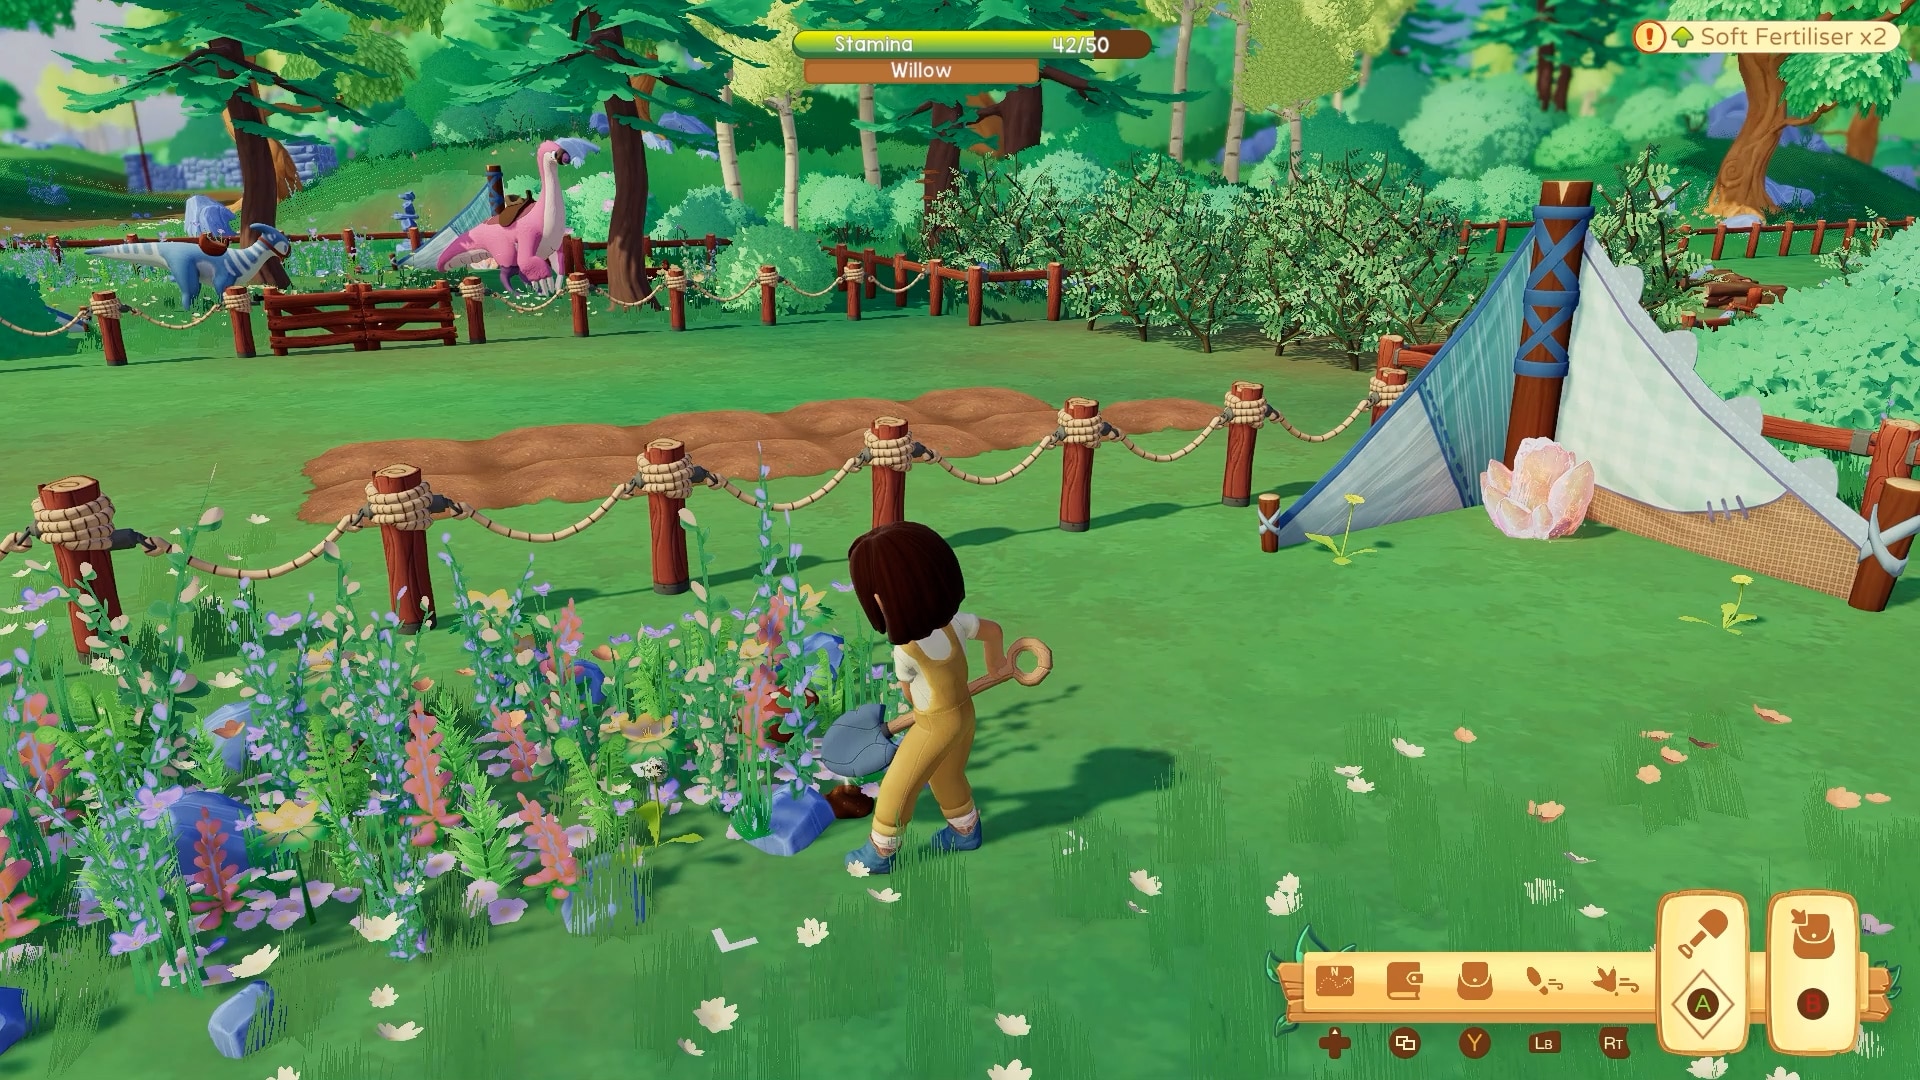 Paleo Pines Screenshot of player planting